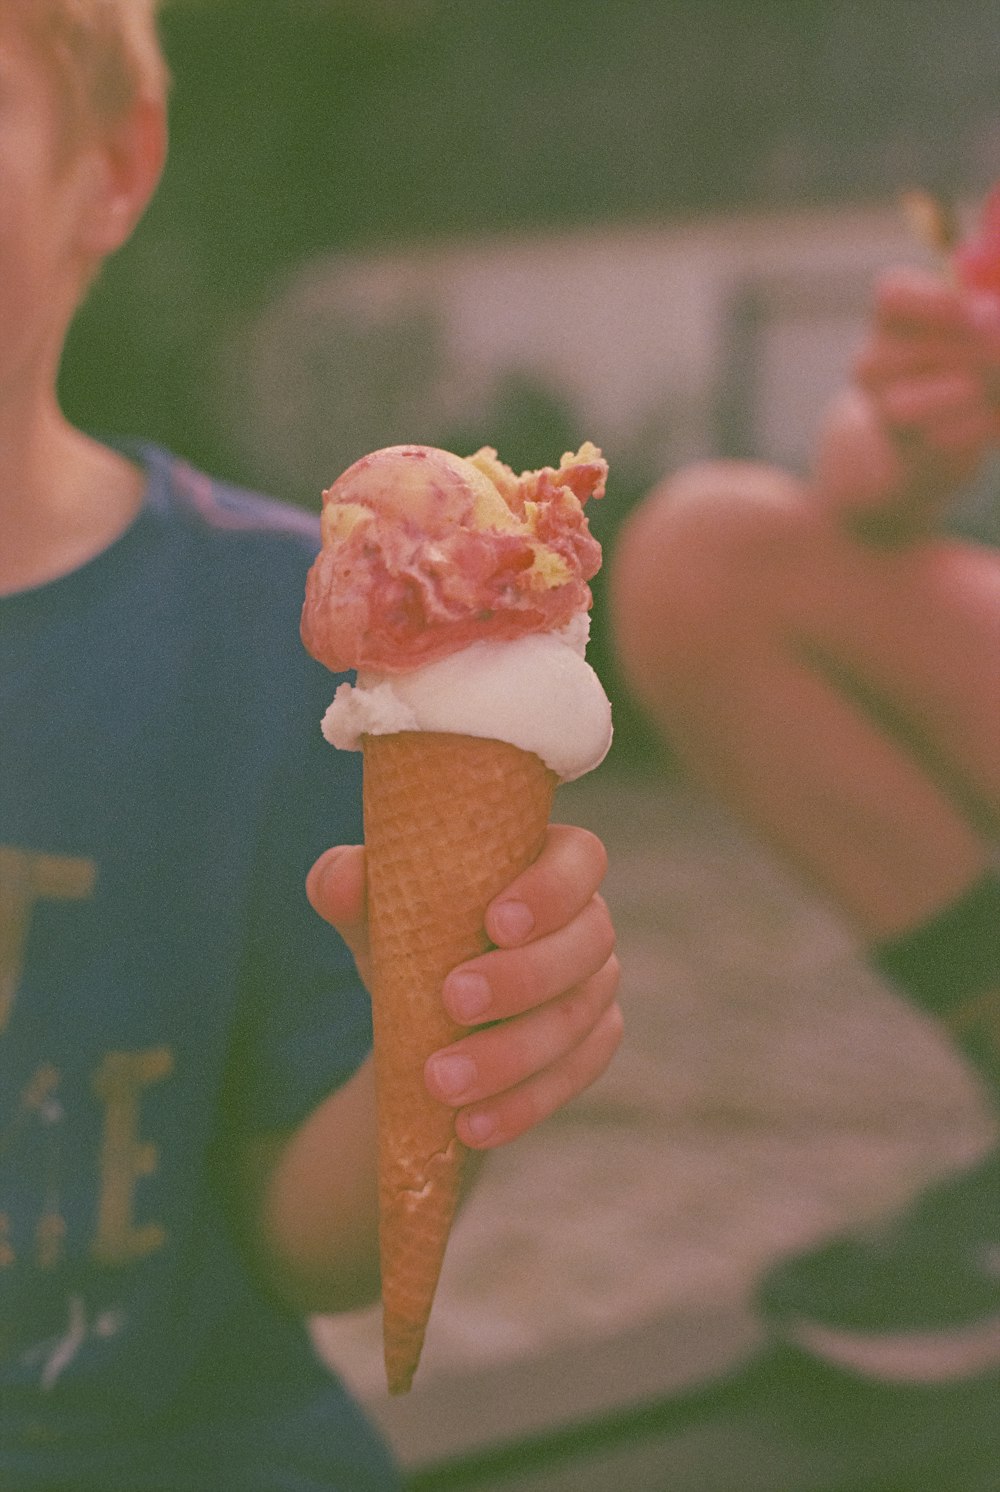 a young boy eating an ice cream cone